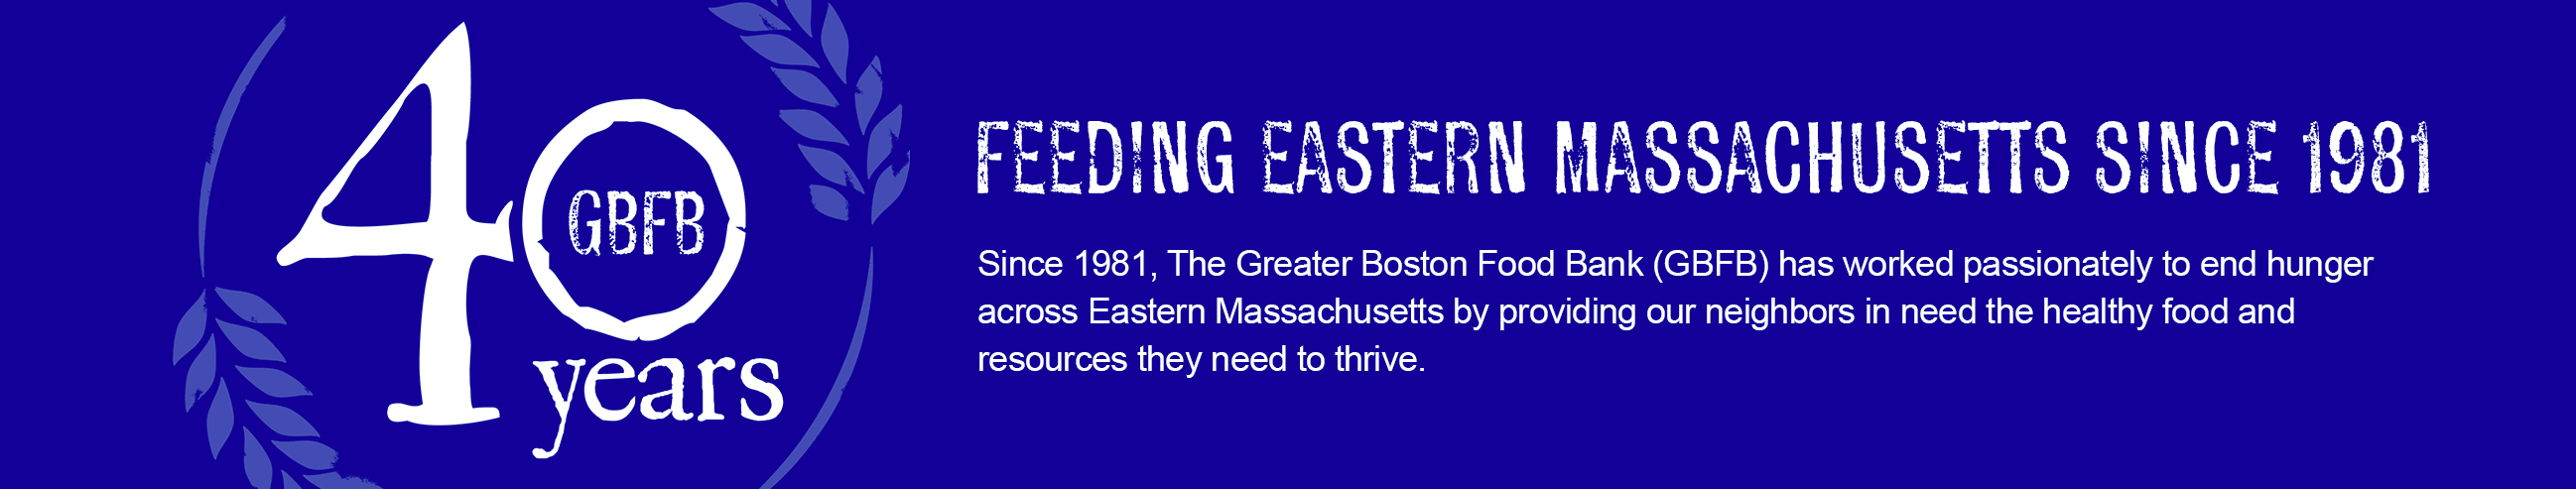 40 Years: Feeding Eastern MA since 1981